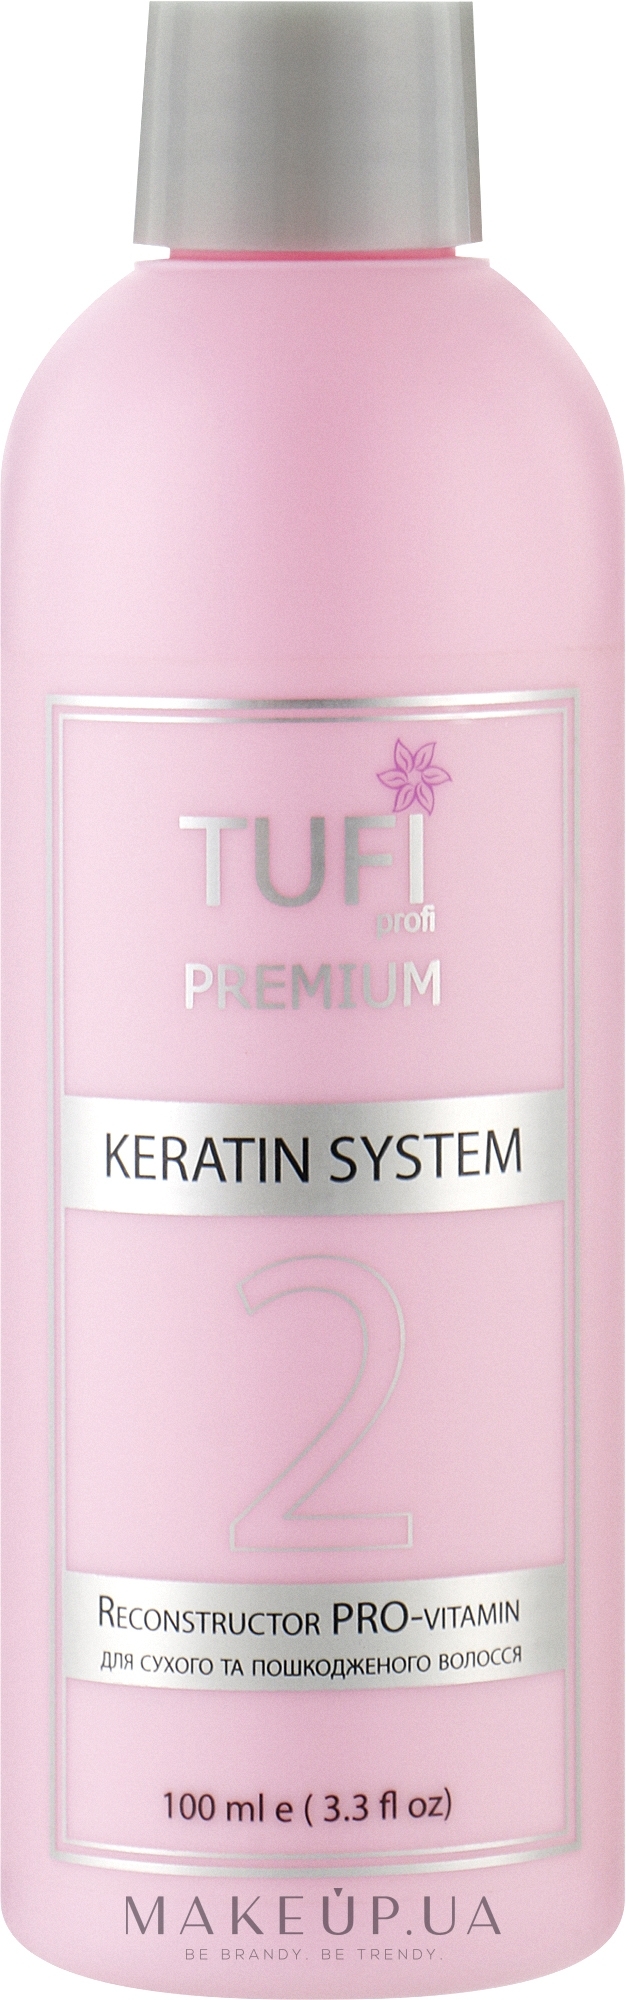 Кератин для сухого та пошкодженого волосся - Tufi Profi Premium Reconstructor PRO-Vitamin — фото 100ml